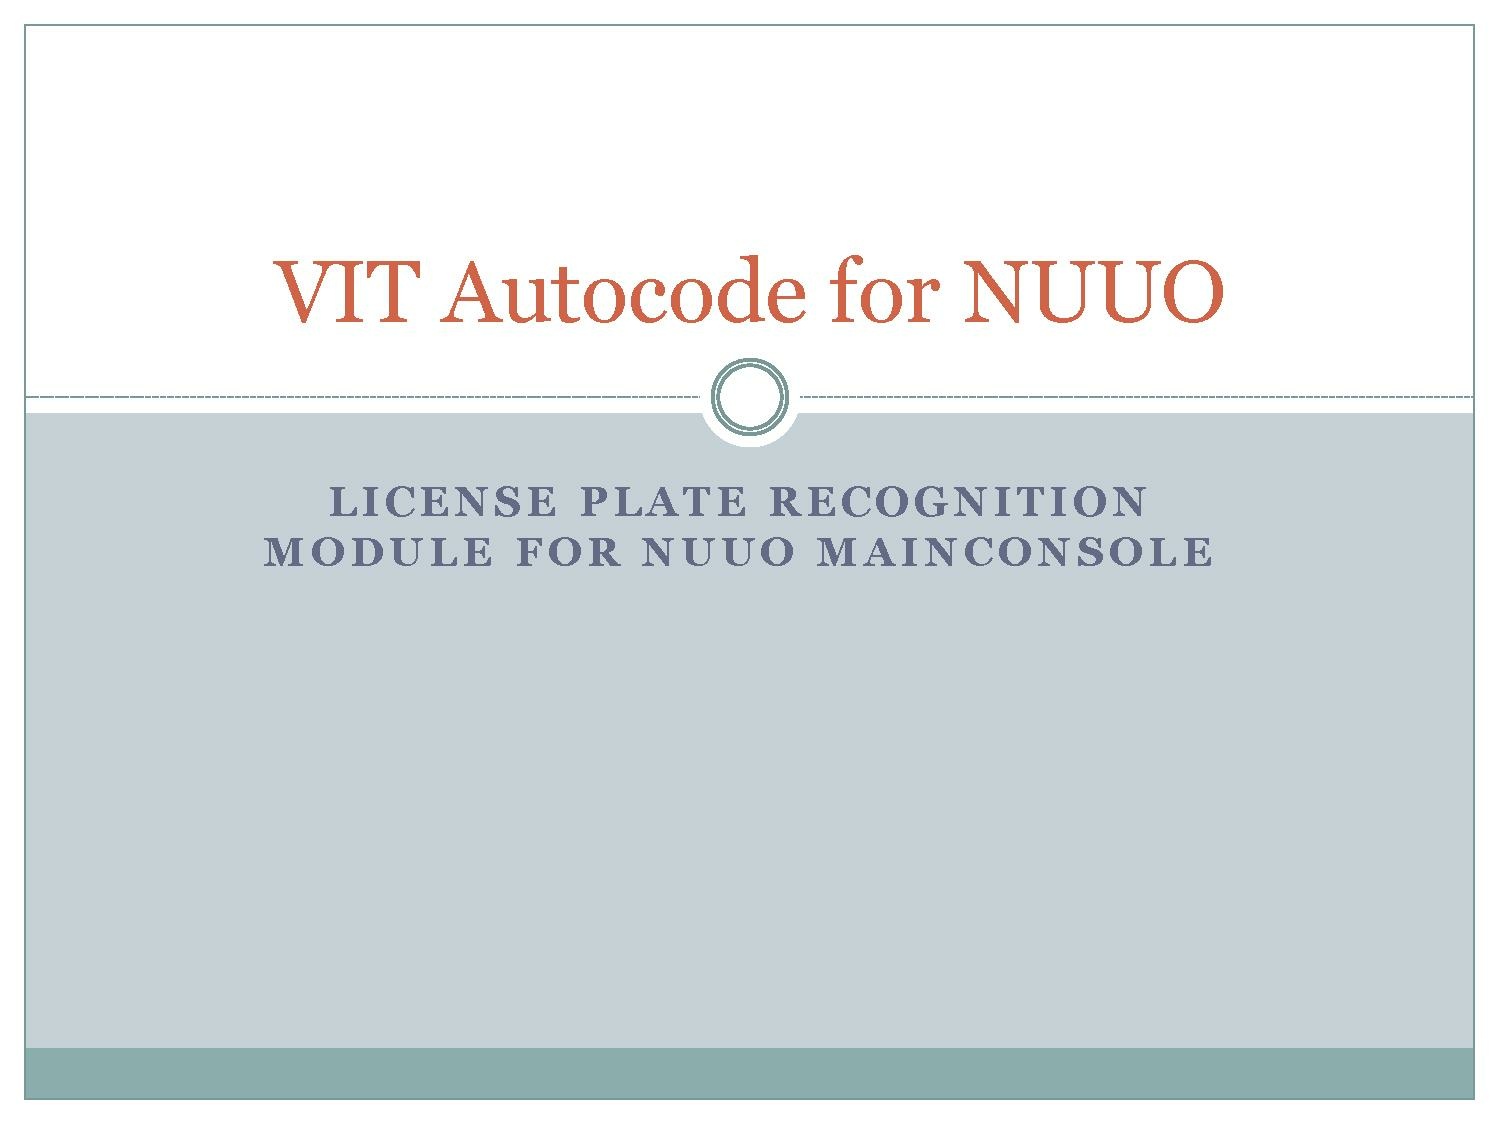 AutoCode for VMS presentation for webinar